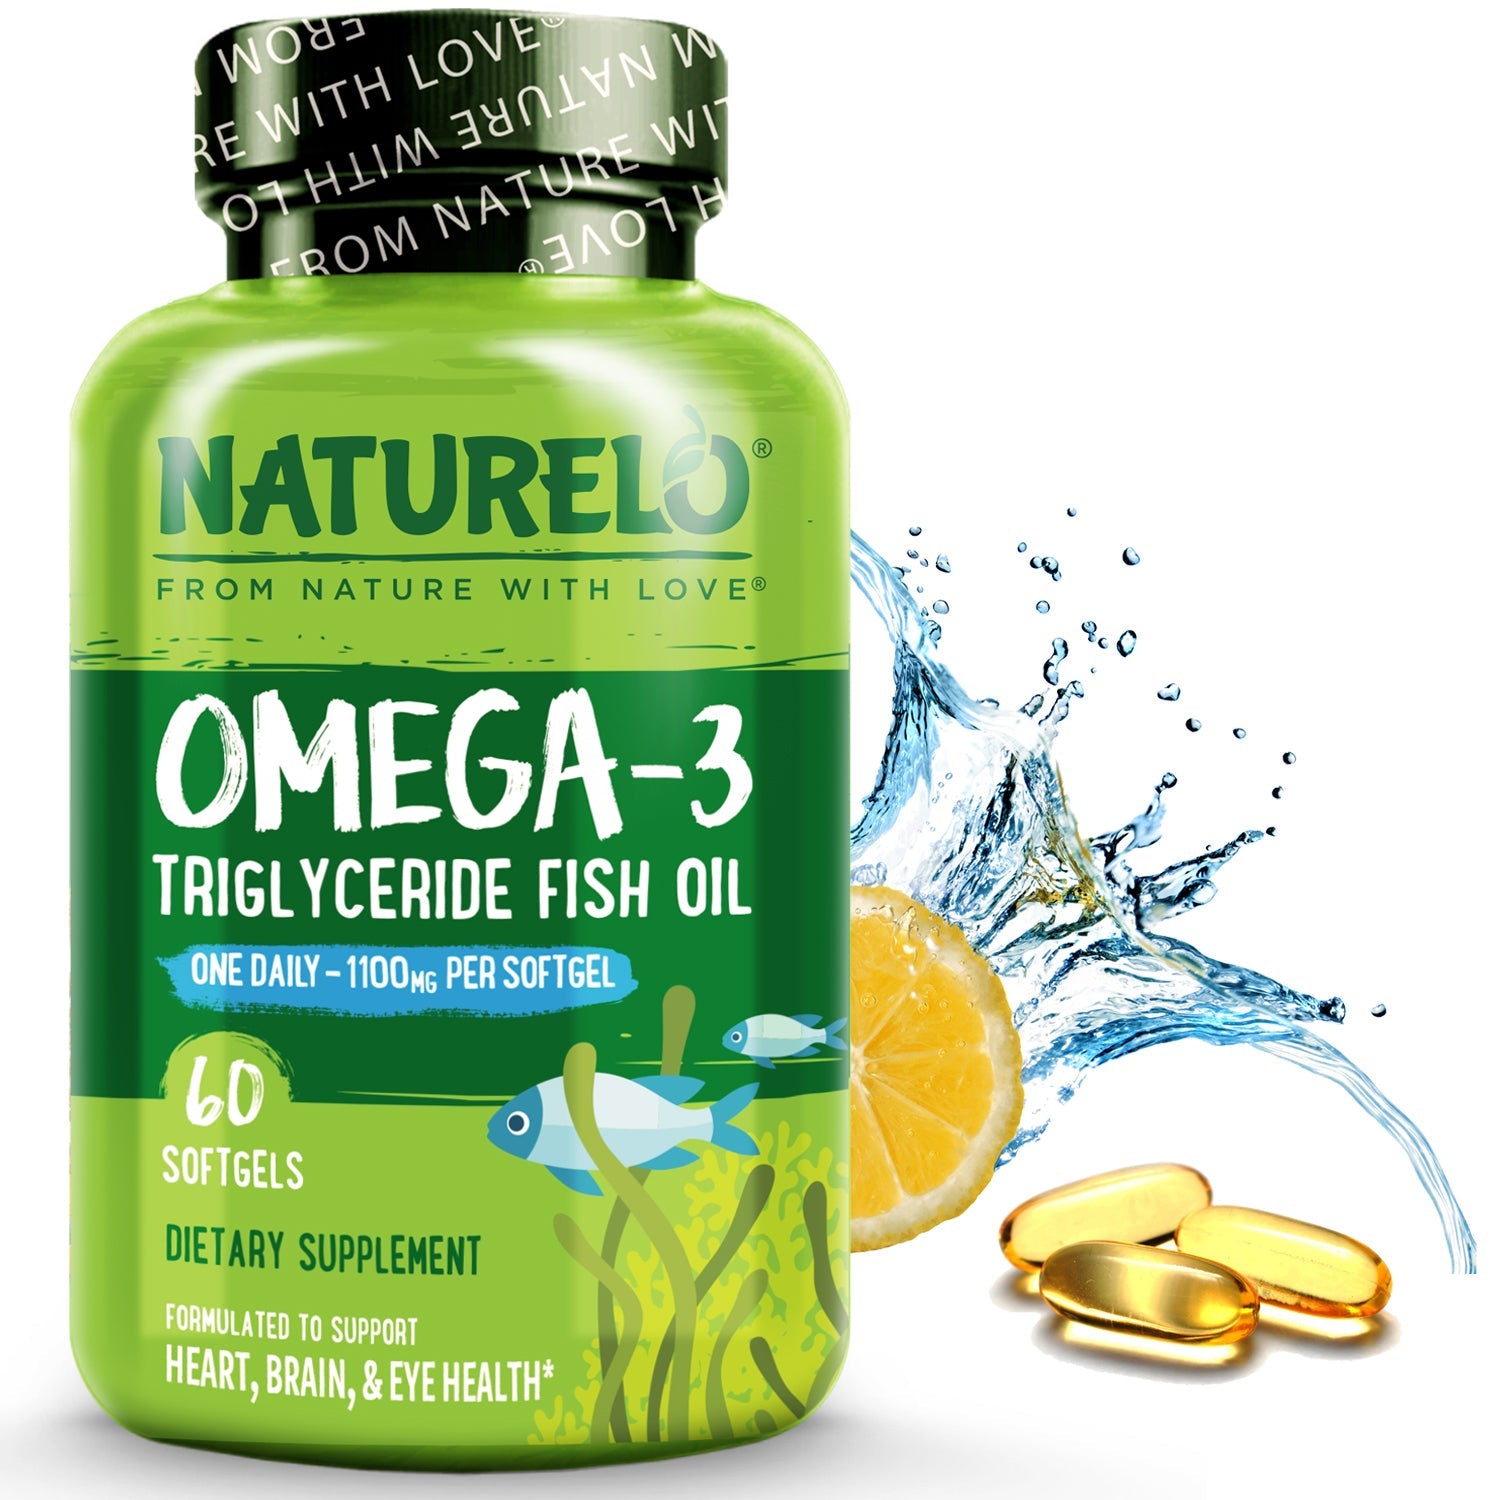 BioTrition Mega Omega 3 Fish Oil with EPA & DHA, Burpless & Odorless